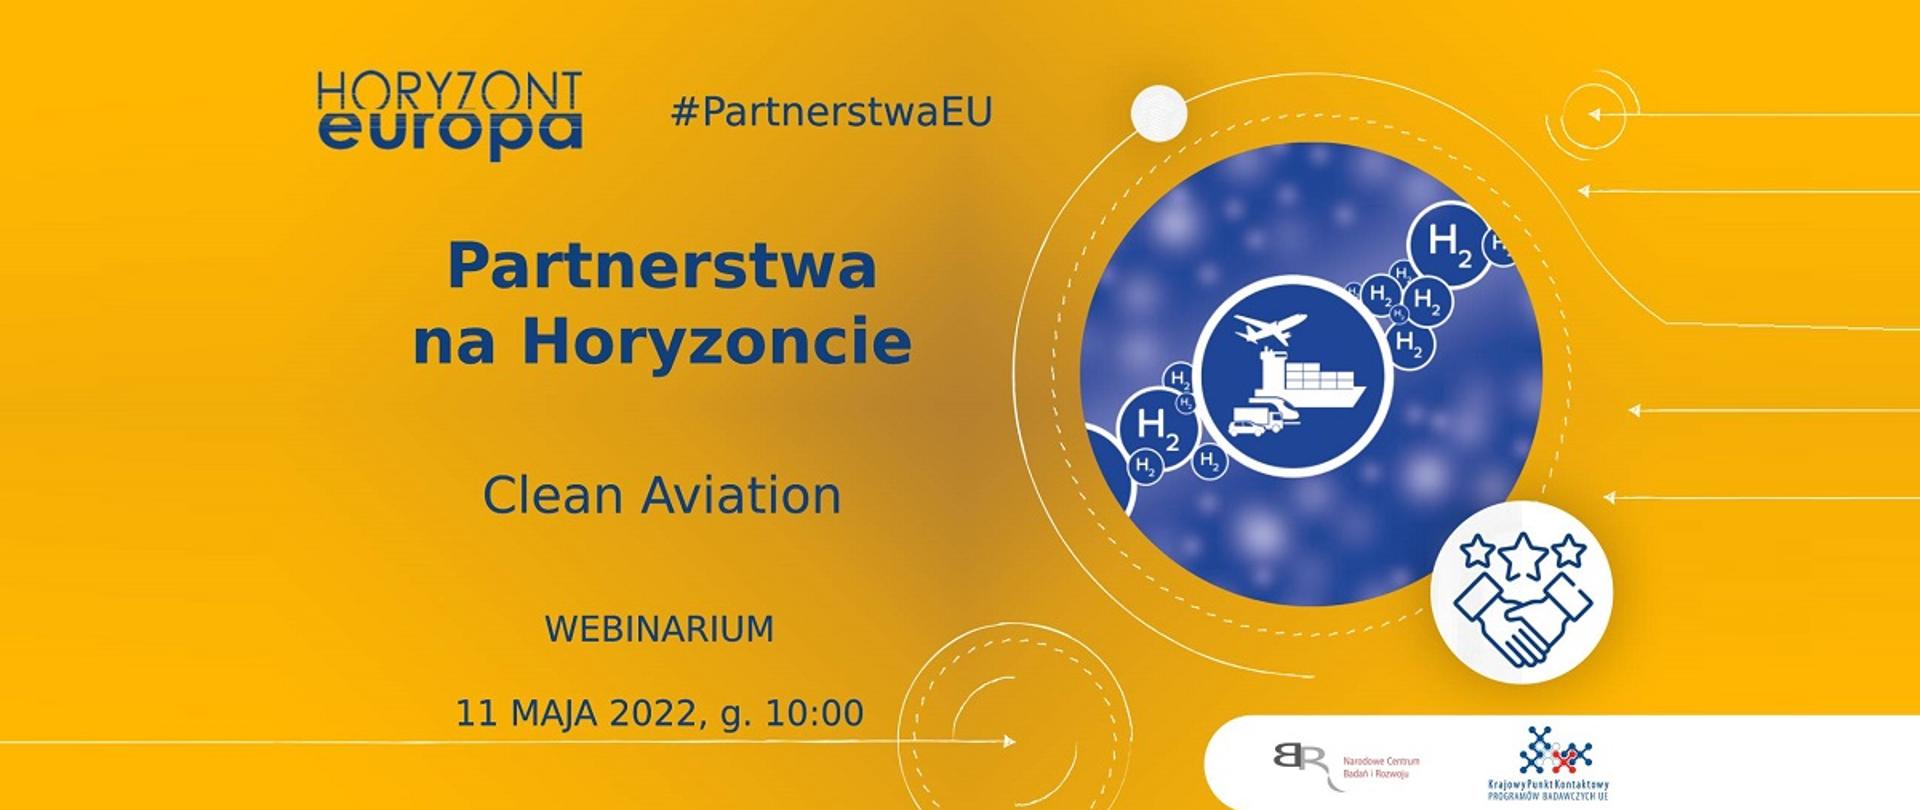 Horyzont Europa
#PartnerstwaEU
Partnerstwa na Horyzoncie
Clean Aviation
Webinarium
11 maja 2022, g. 10:00